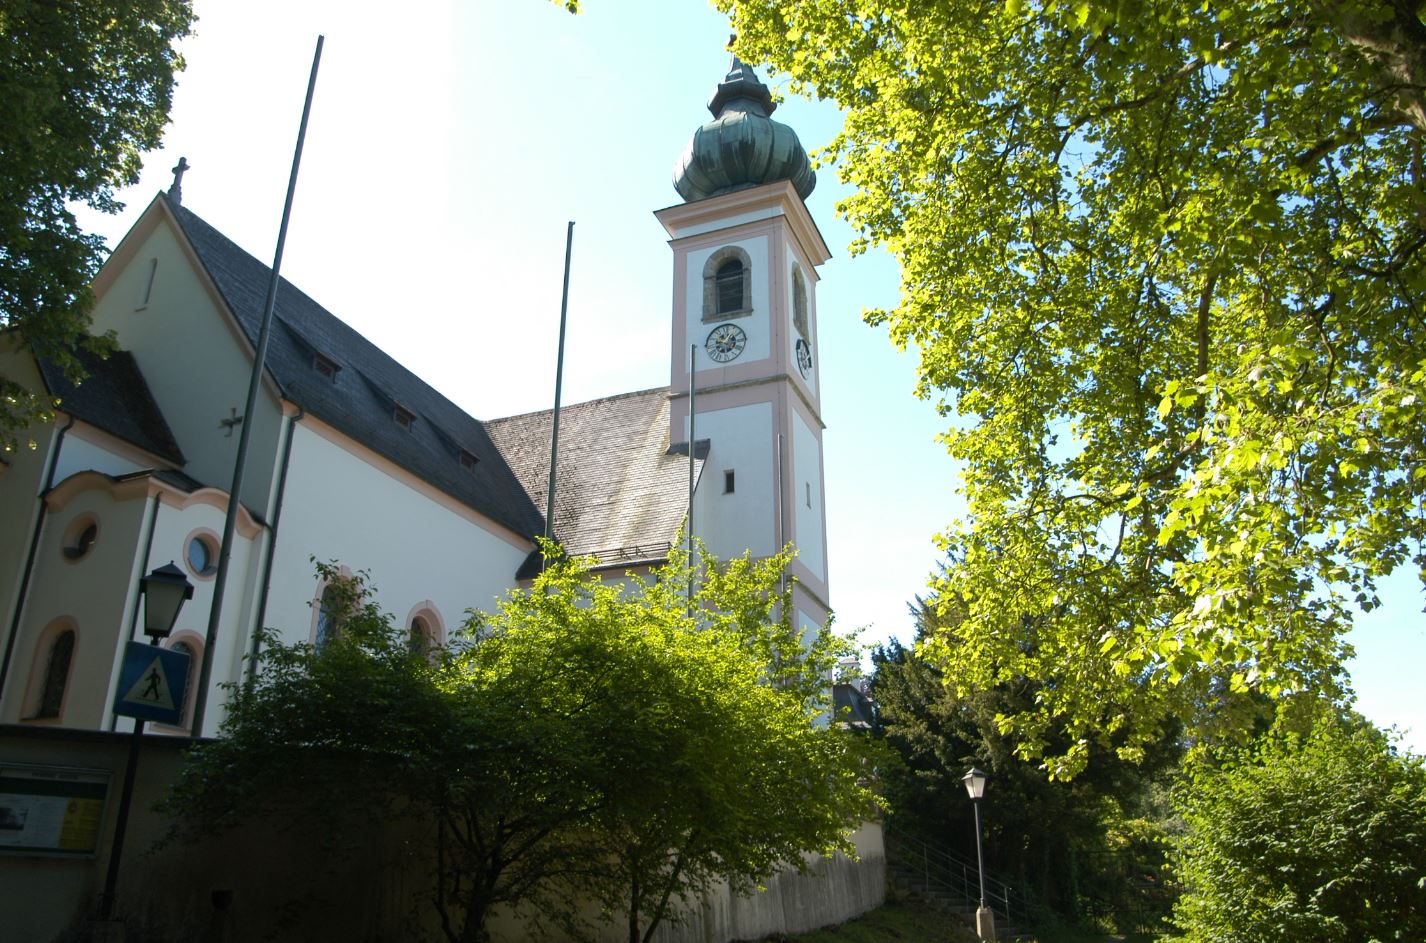 Die Kirche Schloss Aigen vor grünen Bäumen und Büschen.